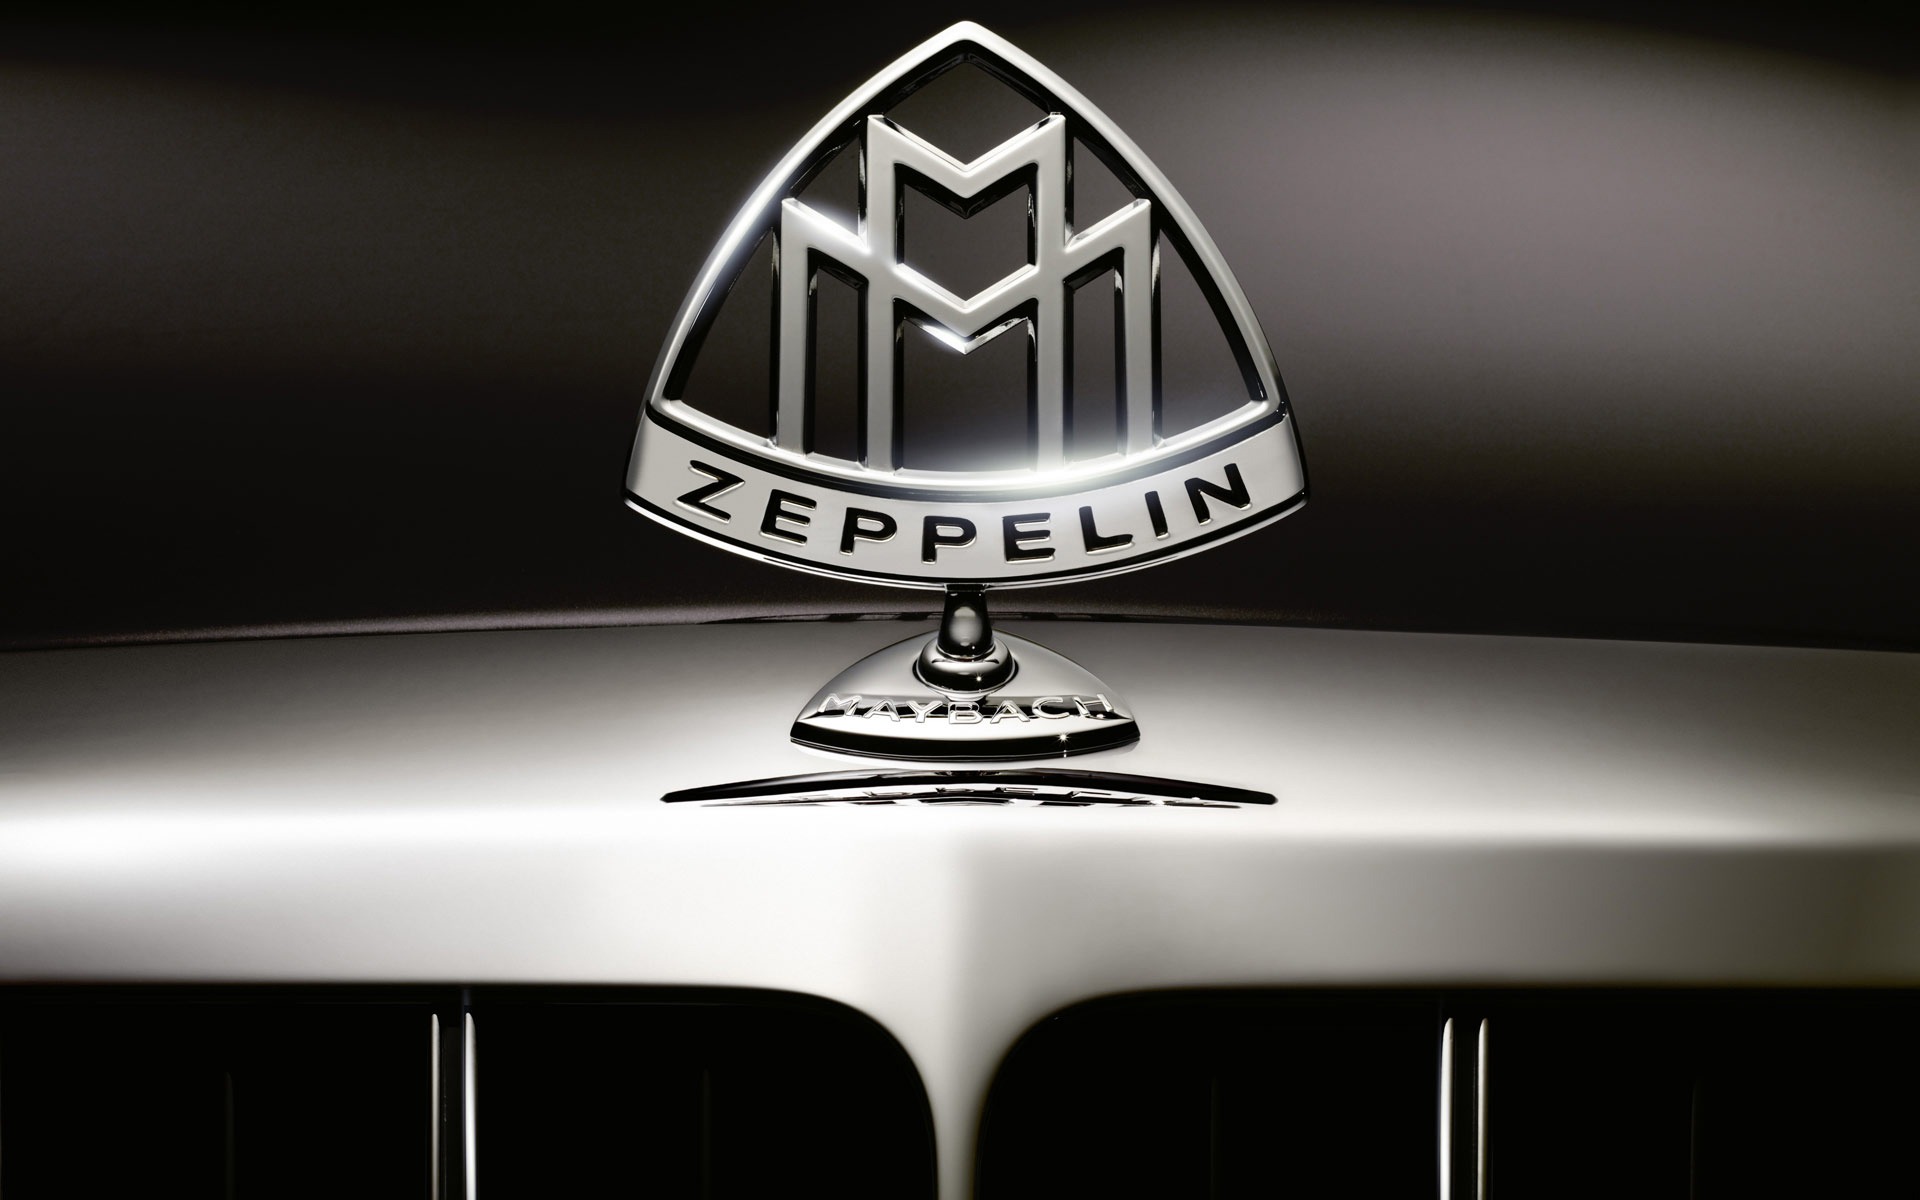 Download Maybach Zeppelin logo Wallpaper Maybach Cars Wallpaper ...